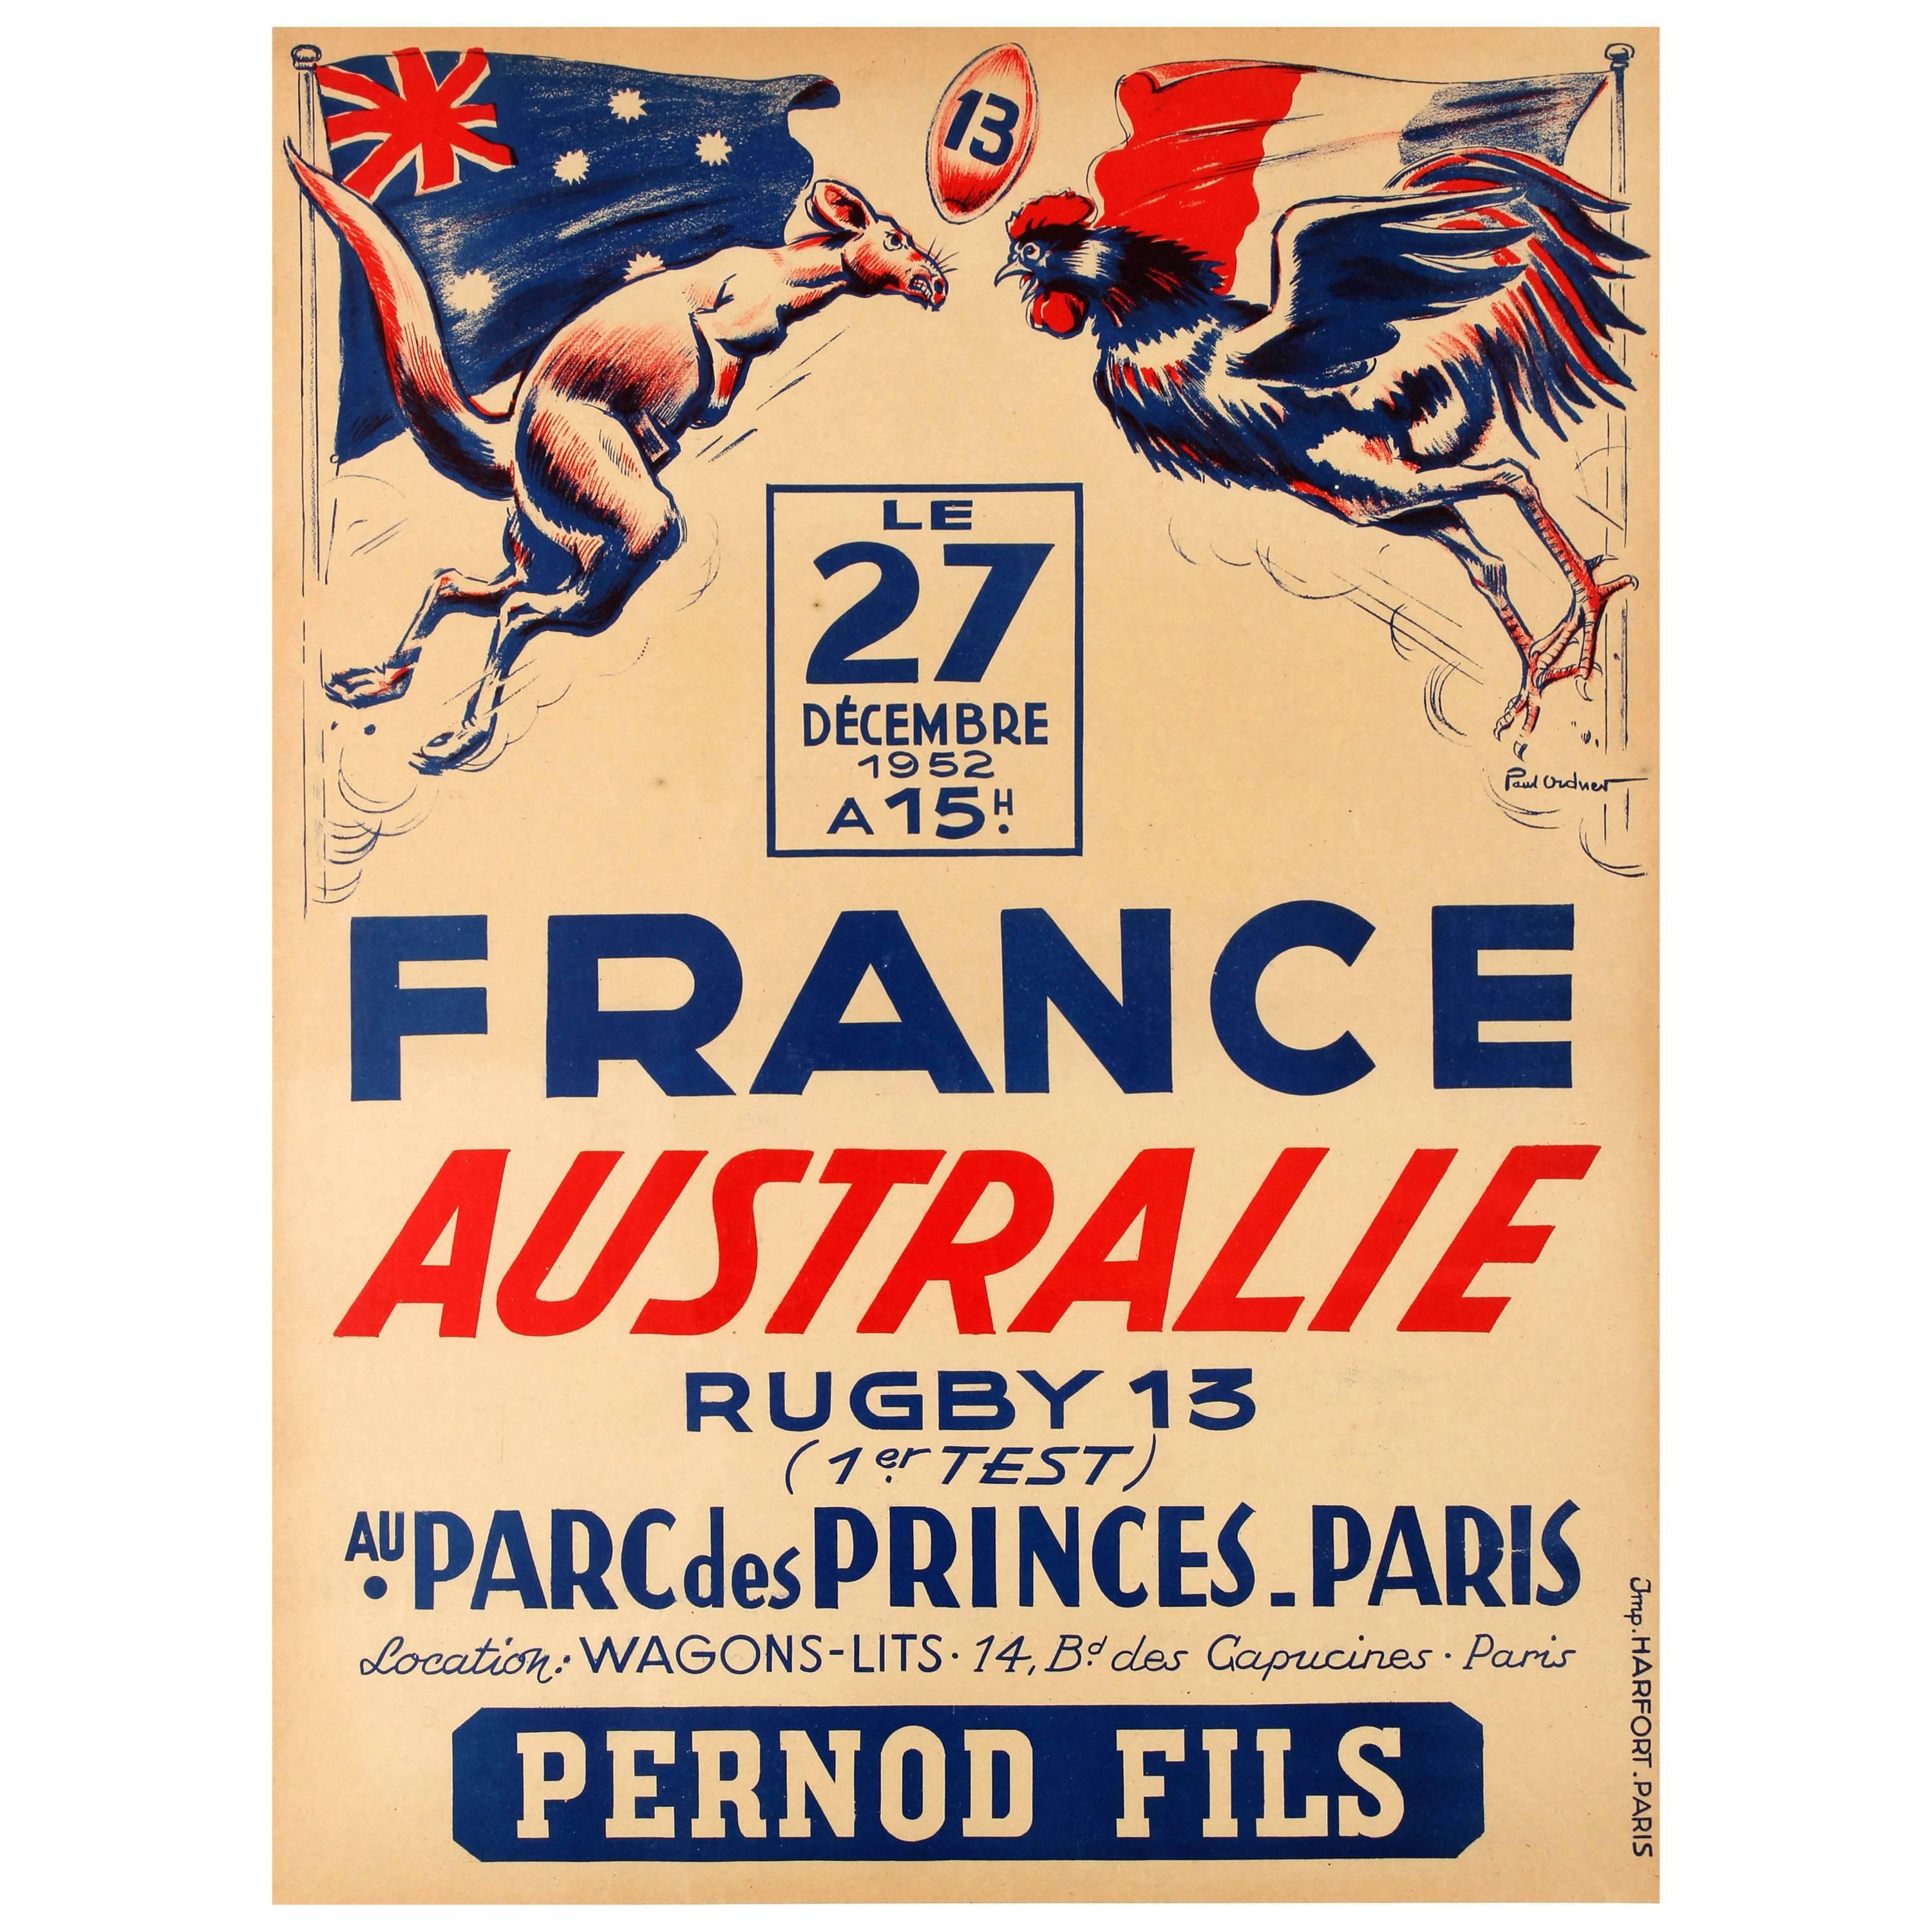 Rare Original Vintage Sport Event Poster France Australia Rugby Test Match Paris